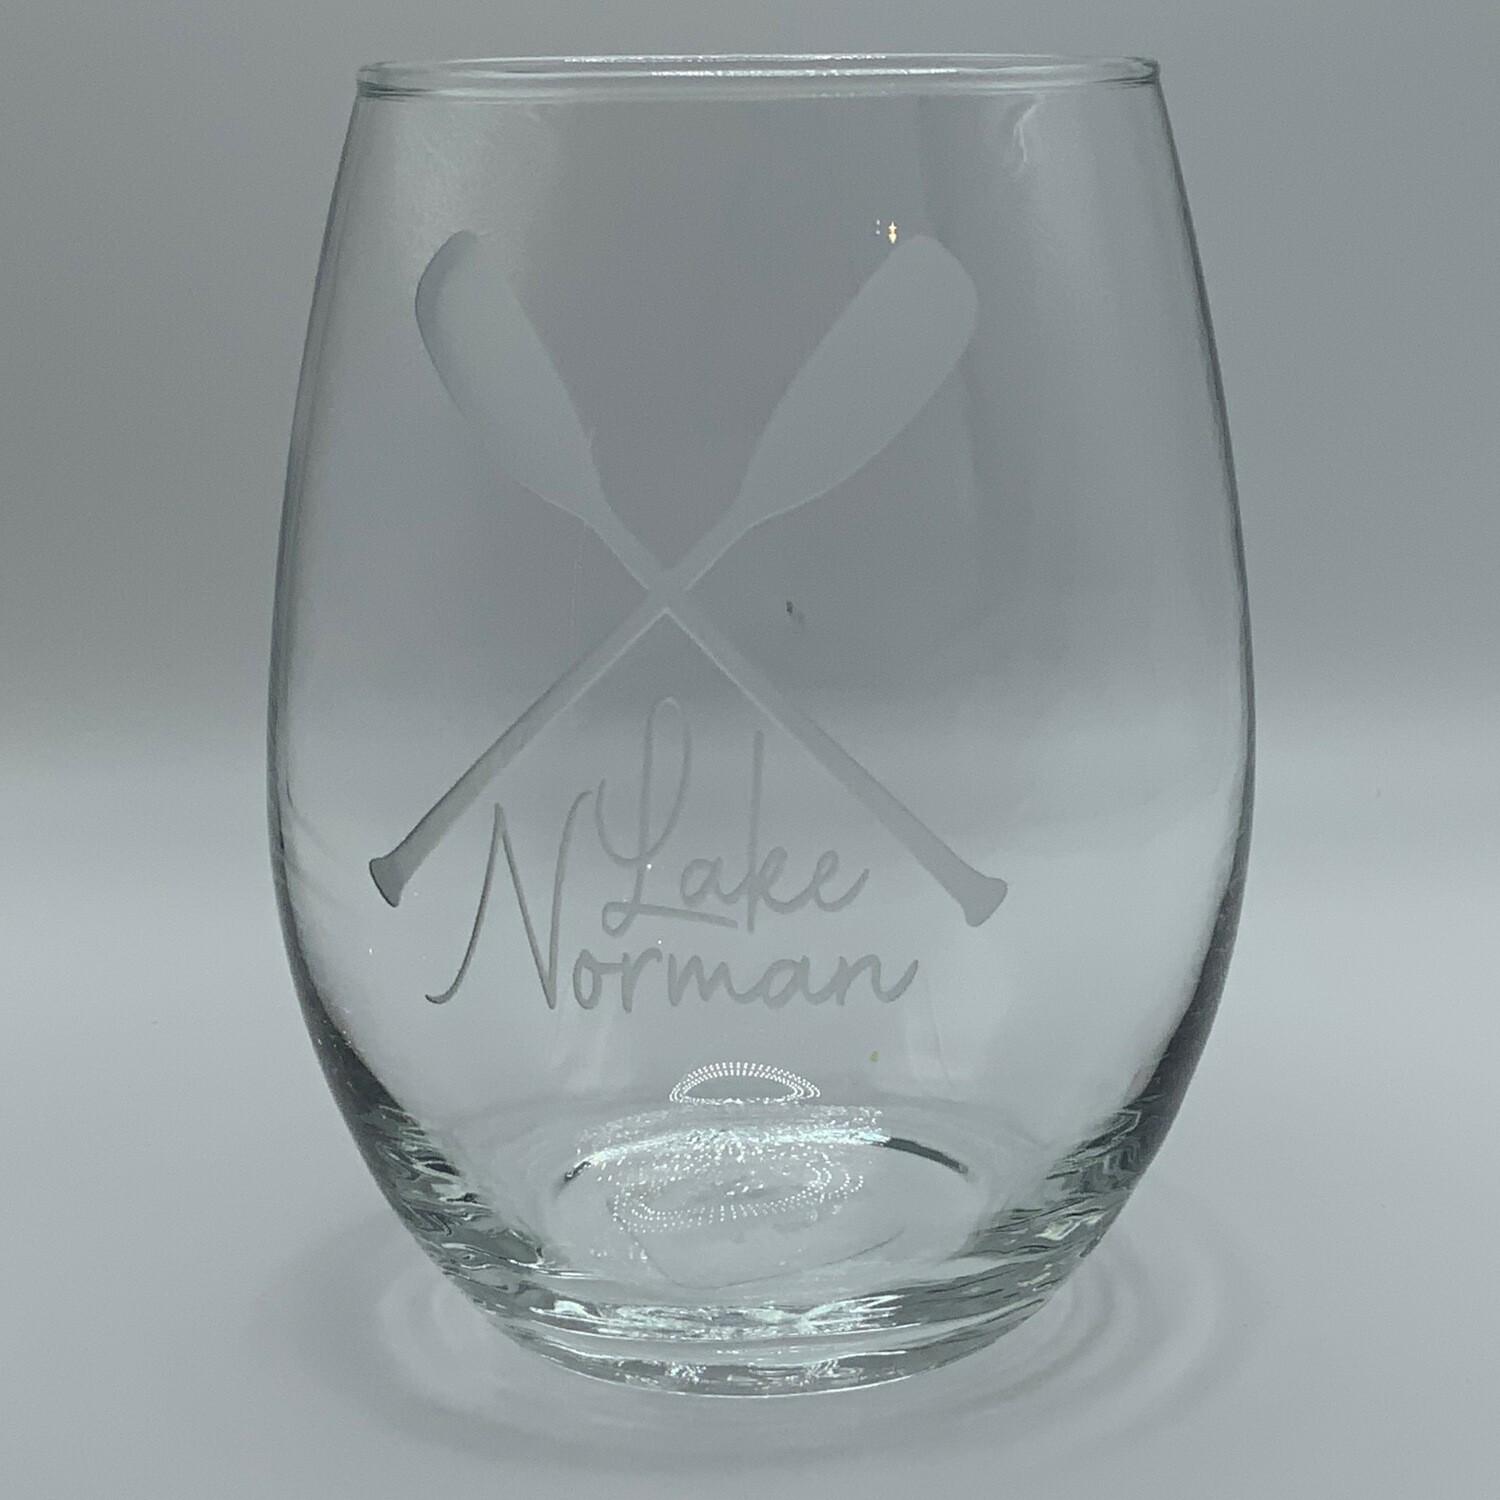 Lake Norman Glasses | Lake Norman Stemless Wine Glass | Paddles